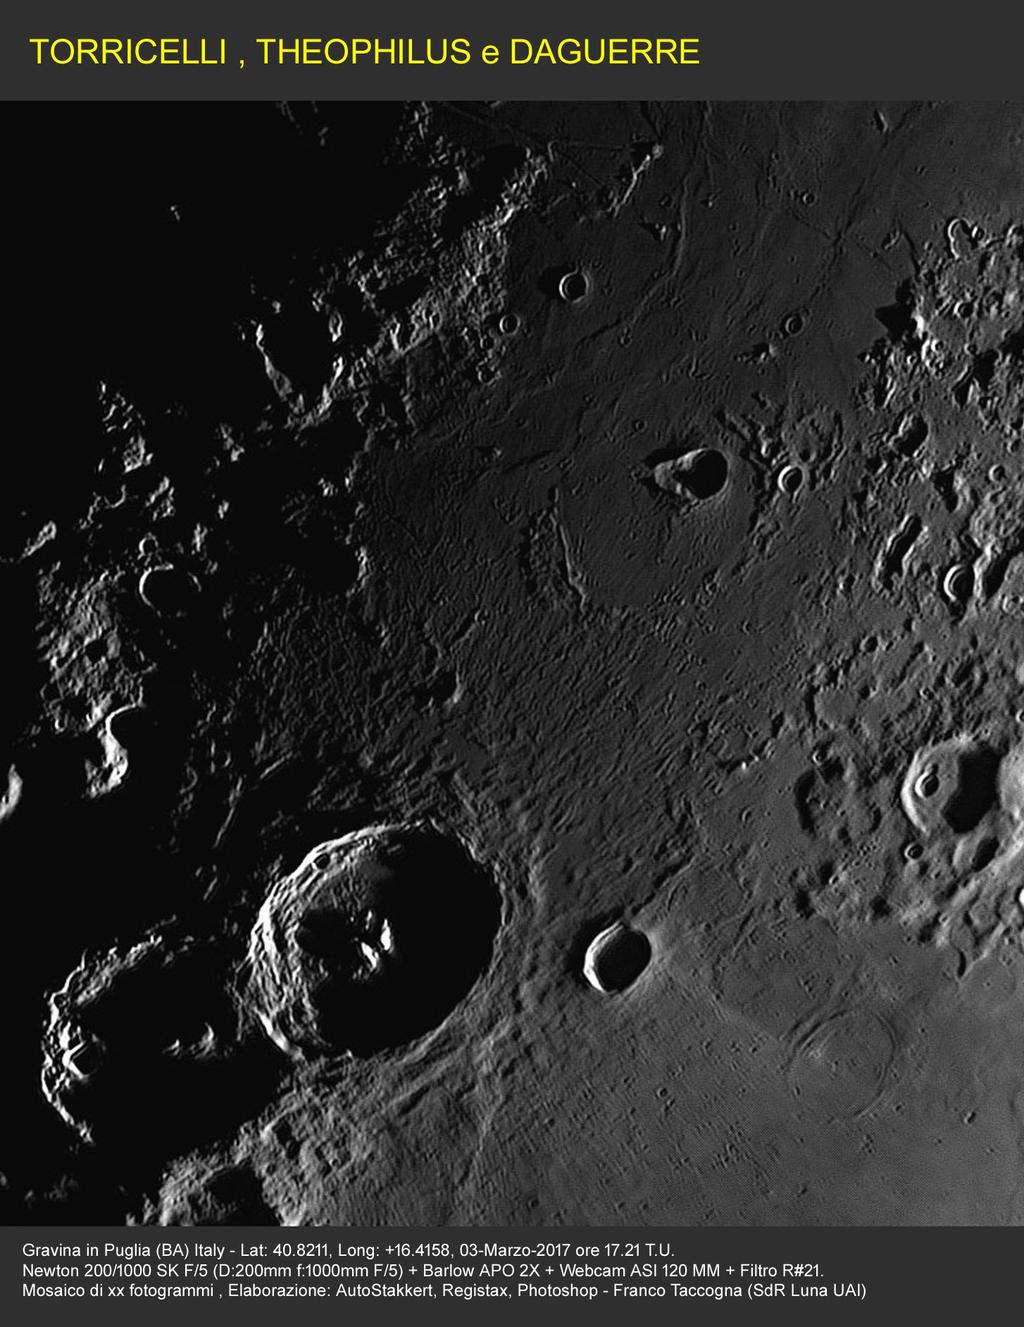 Le foto della Sezione di Ricerca Luna - UAI..i crateri Torricelli, Theophilus e Daguerre.